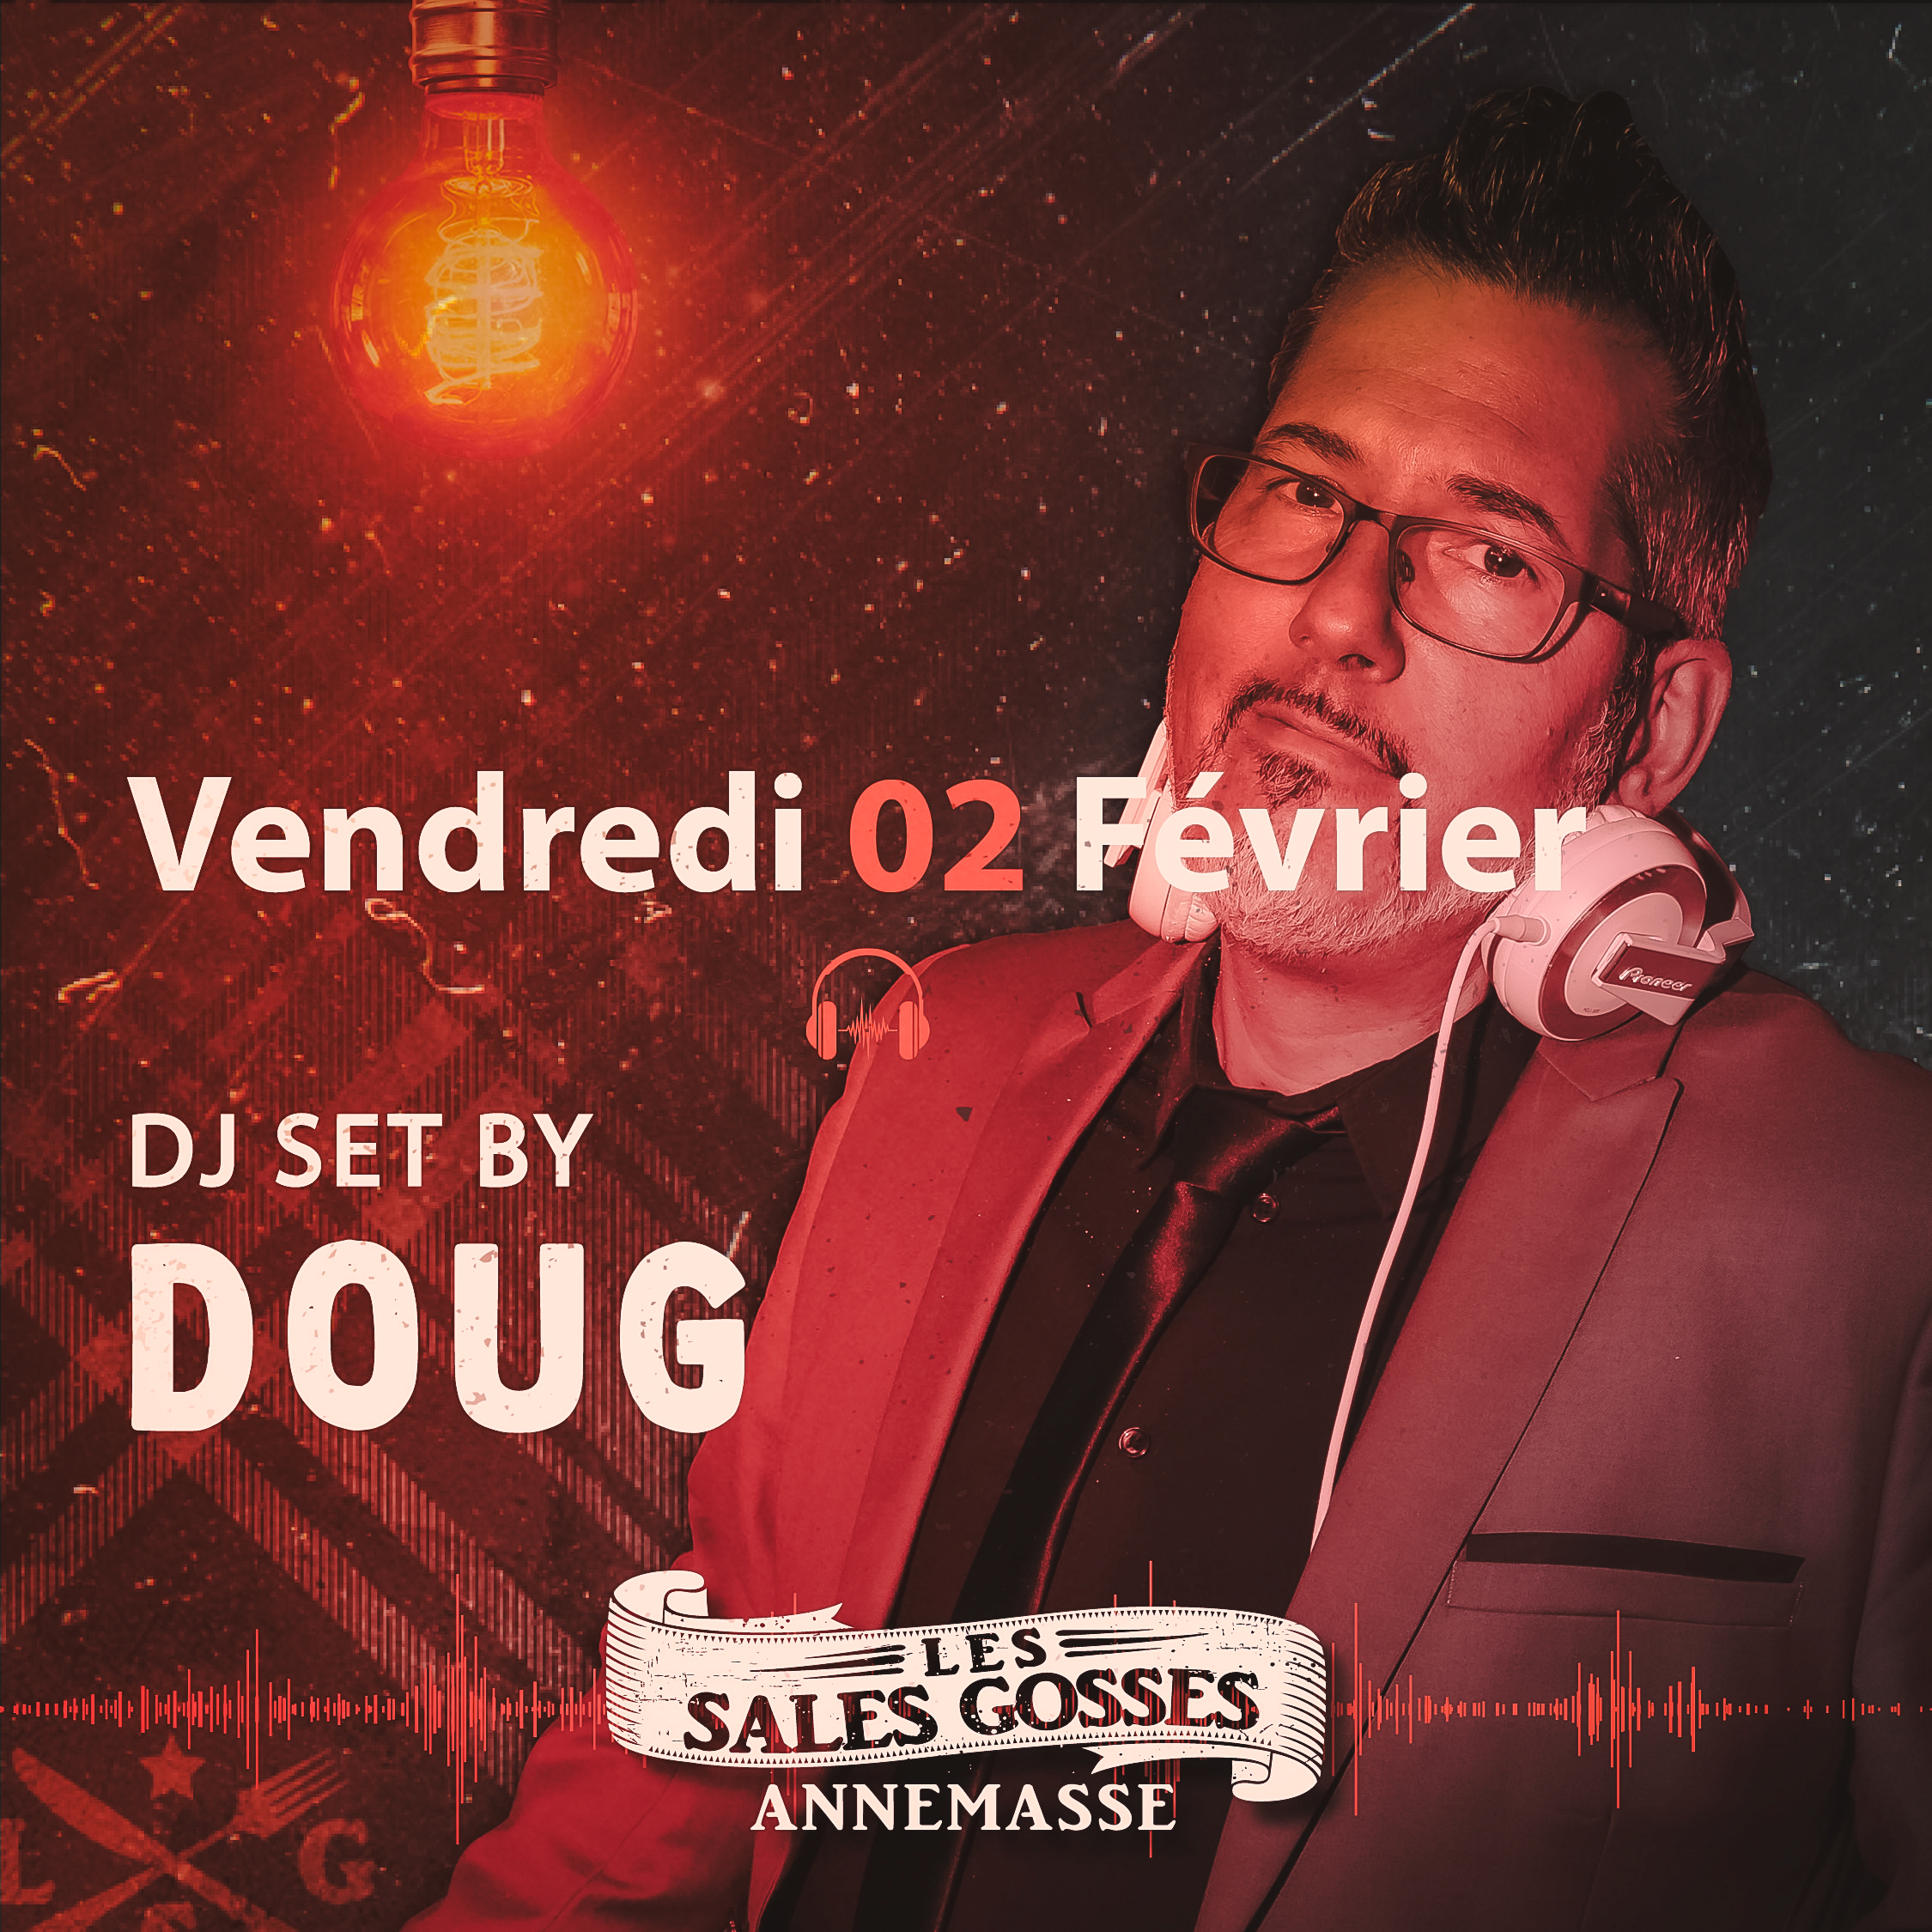  DJ sets aux Sales Gosses Annemasse vendredi et samedi de 22h jusqu’à 3h  >Vendredi, DJ Doug